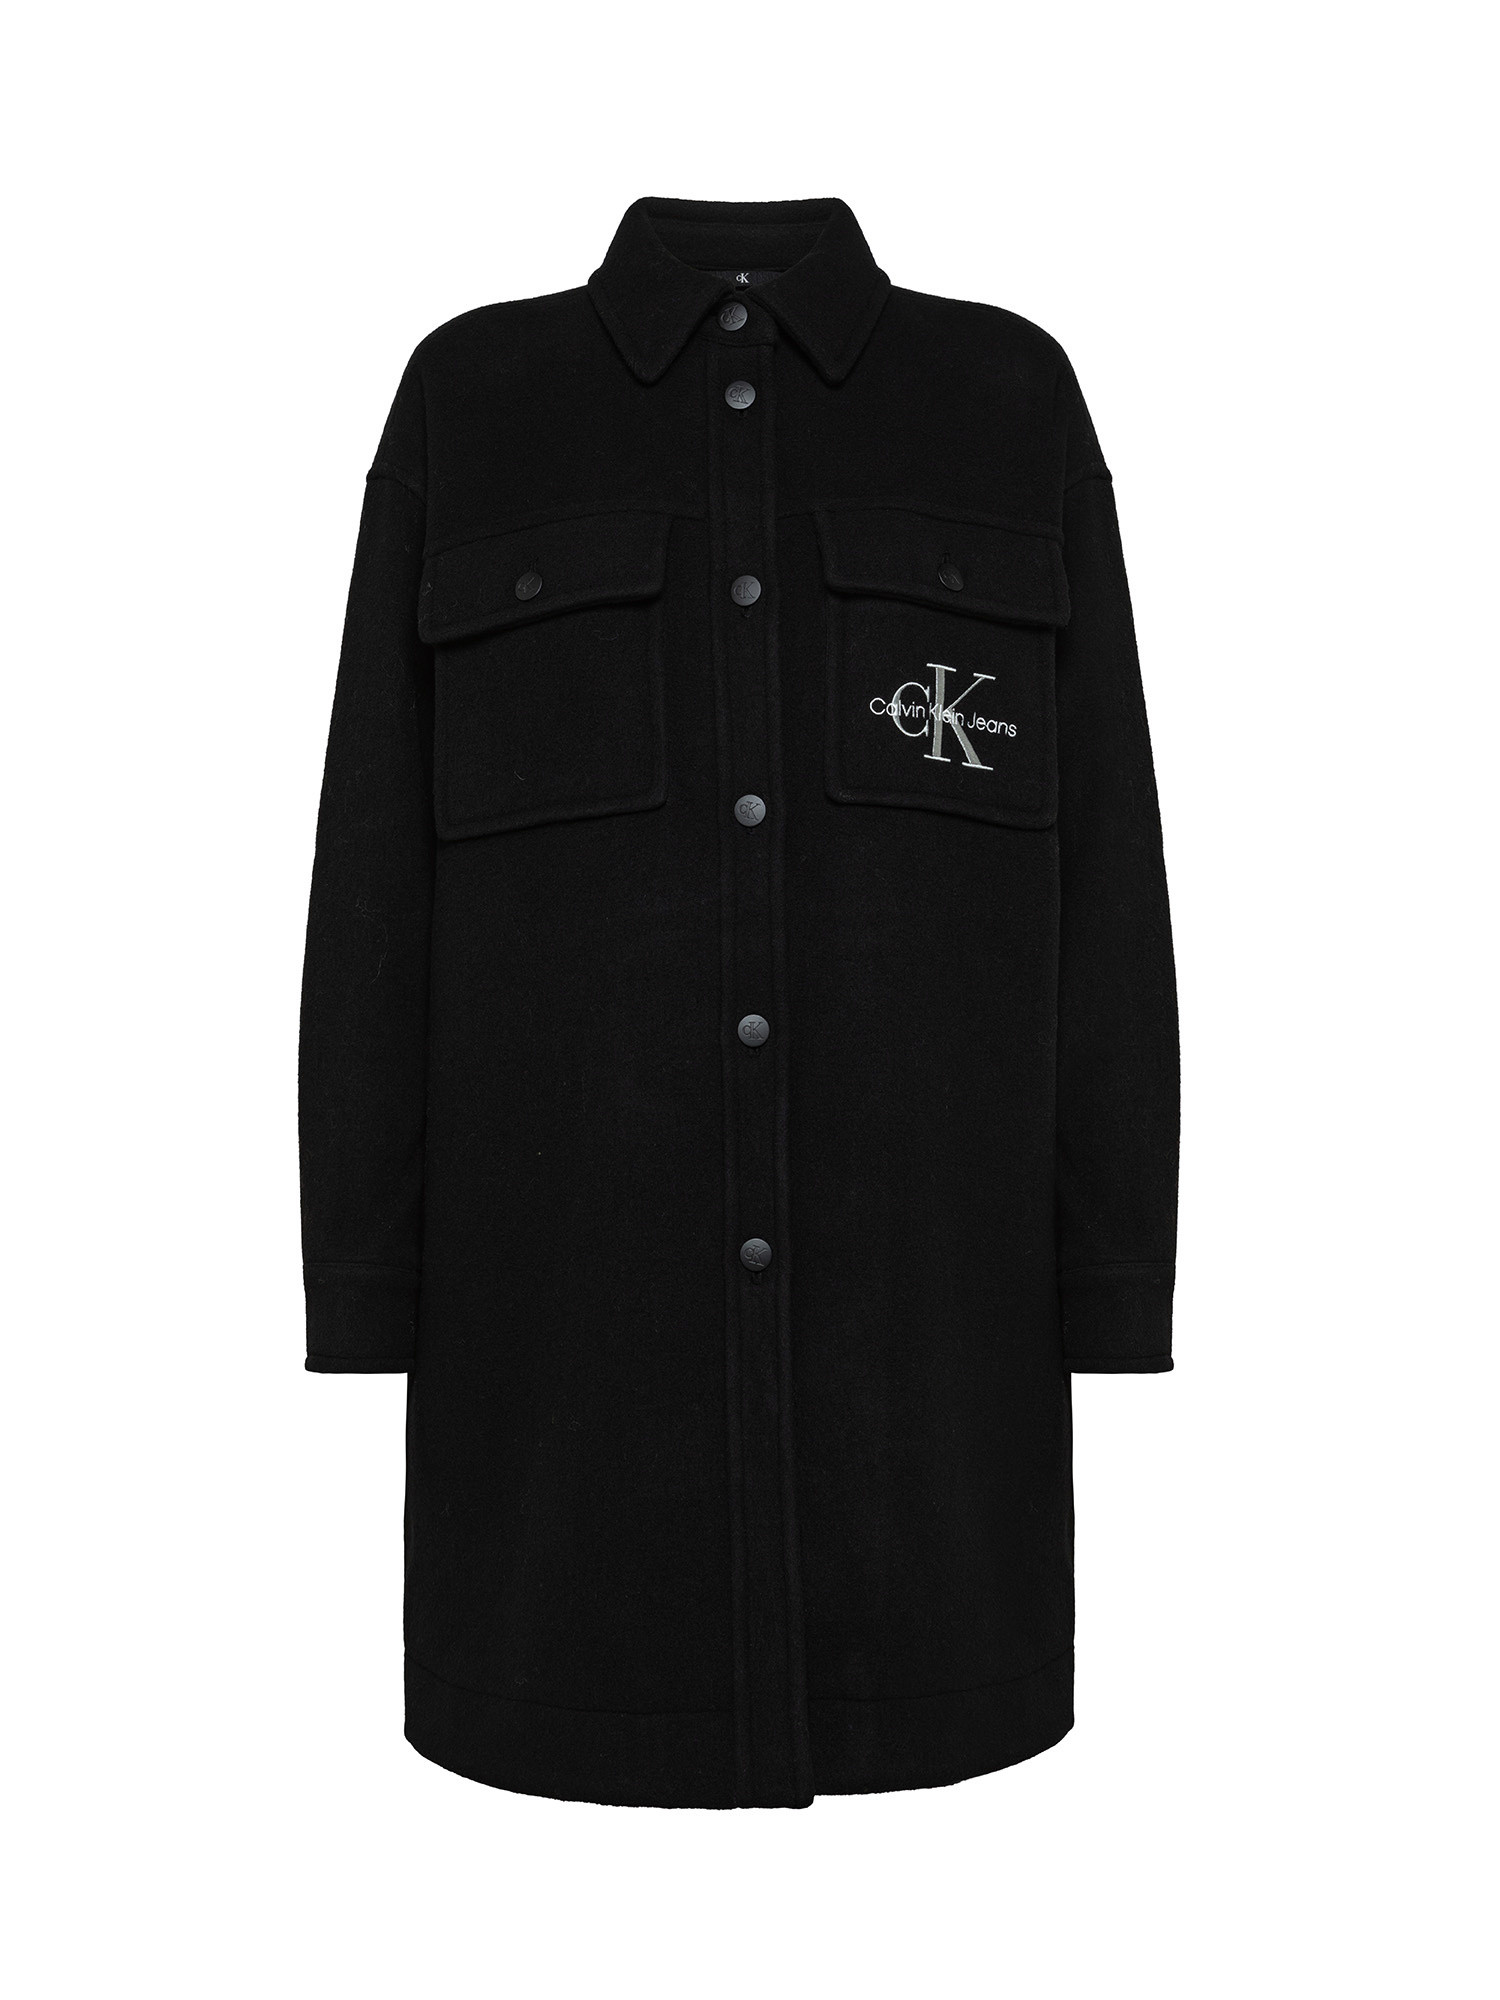 Calvin Klein Jeans - Jacket with logo, Black, large image number 0